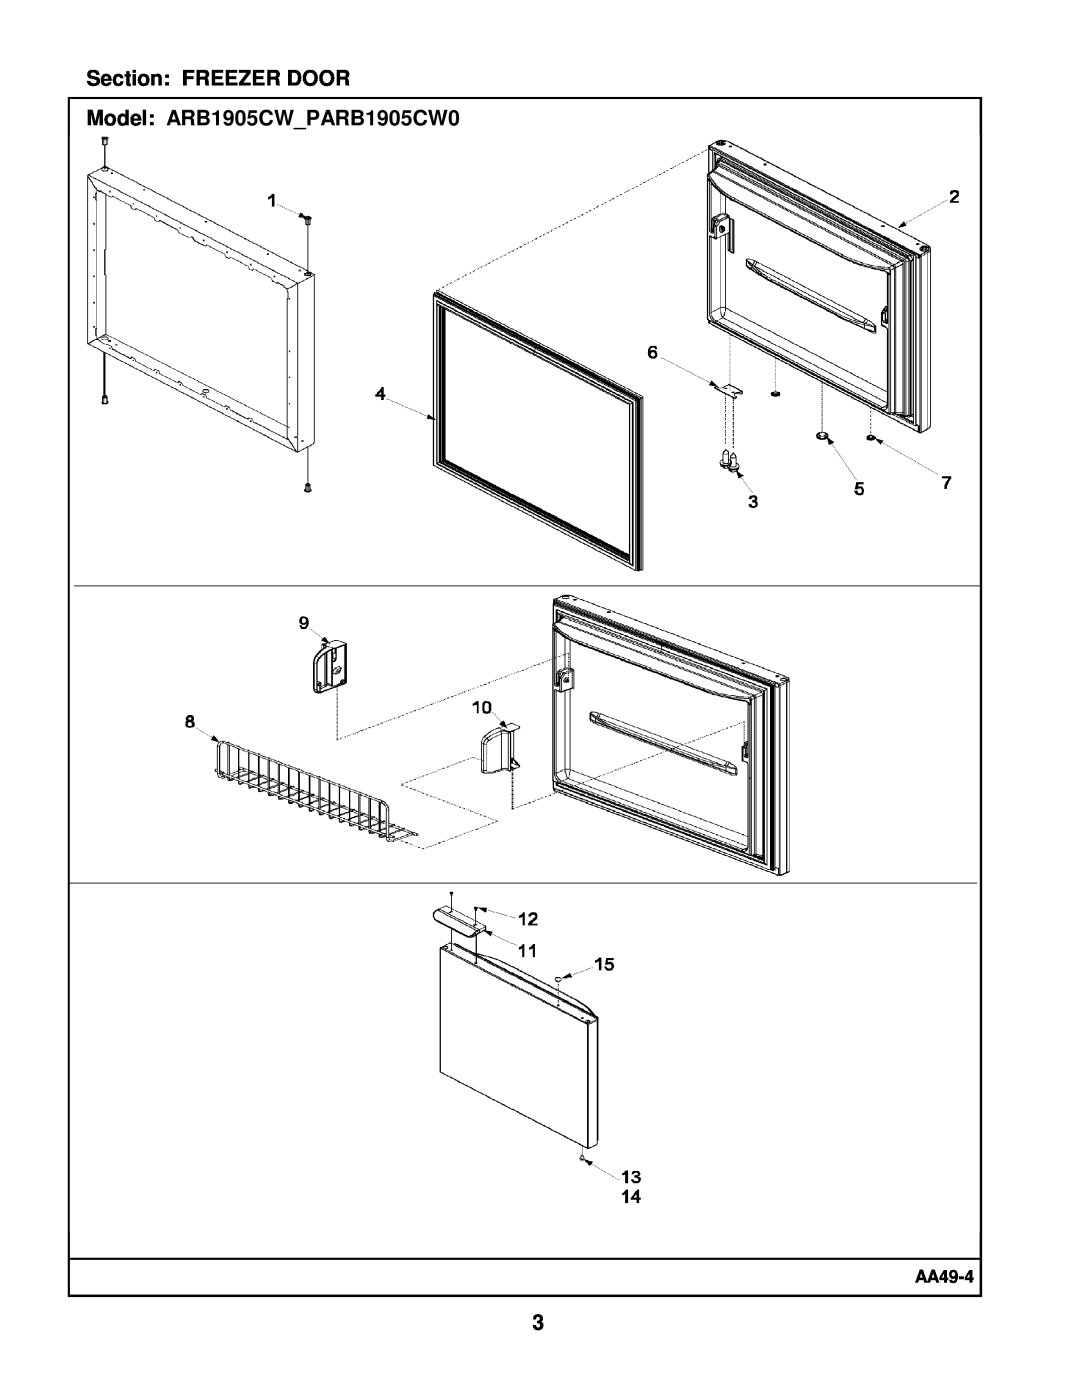 Maytag manual Section FREEZER DOOR, AA49-4, Model ARB1905CW PARB1905CW0 